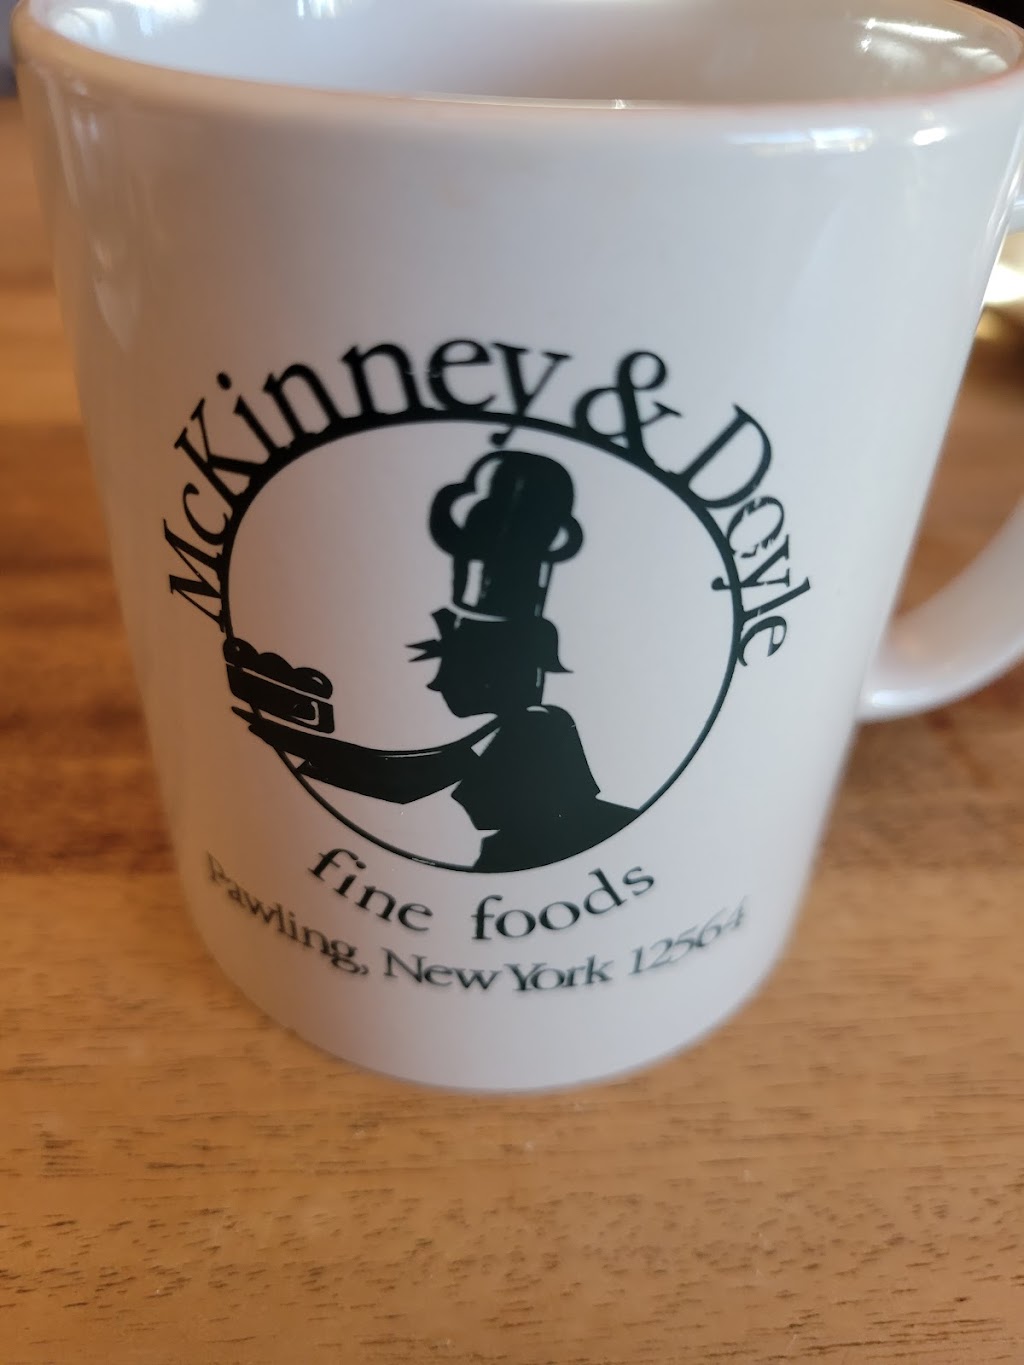 McKinney & Doyle Corner Bakery & Fine Foods Cafe | 10 Charles Colman Blvd, Pawling, NY 12564 | Phone: (845) 855-3707